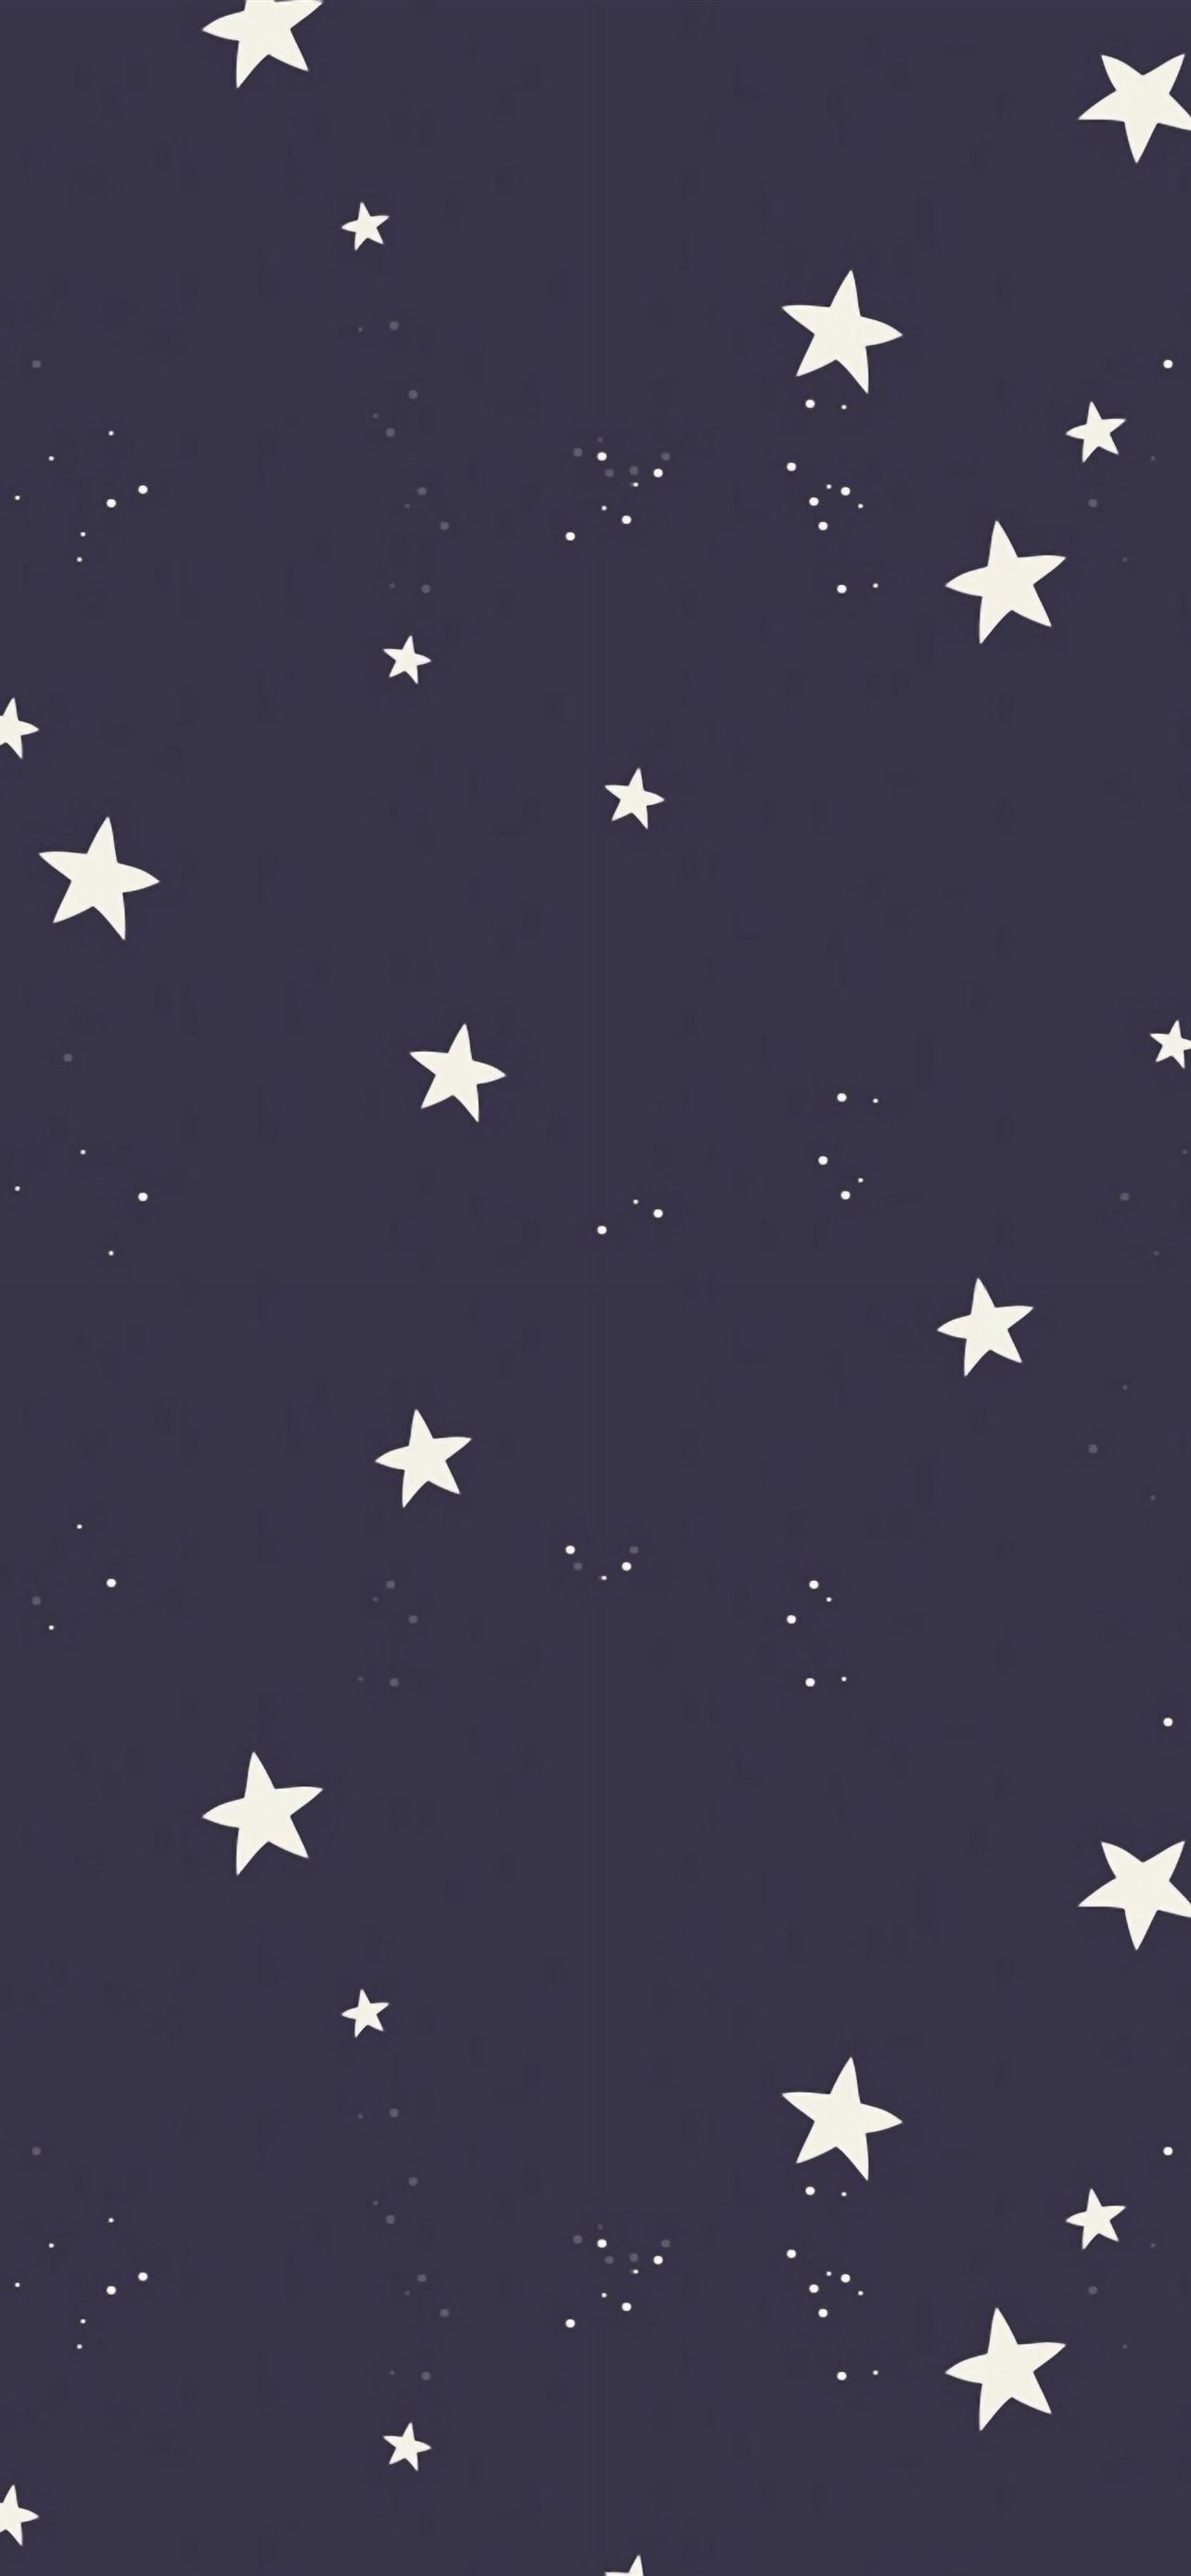 Simple Stars Pattern Dark Background iPhone Wallpaper Free Download